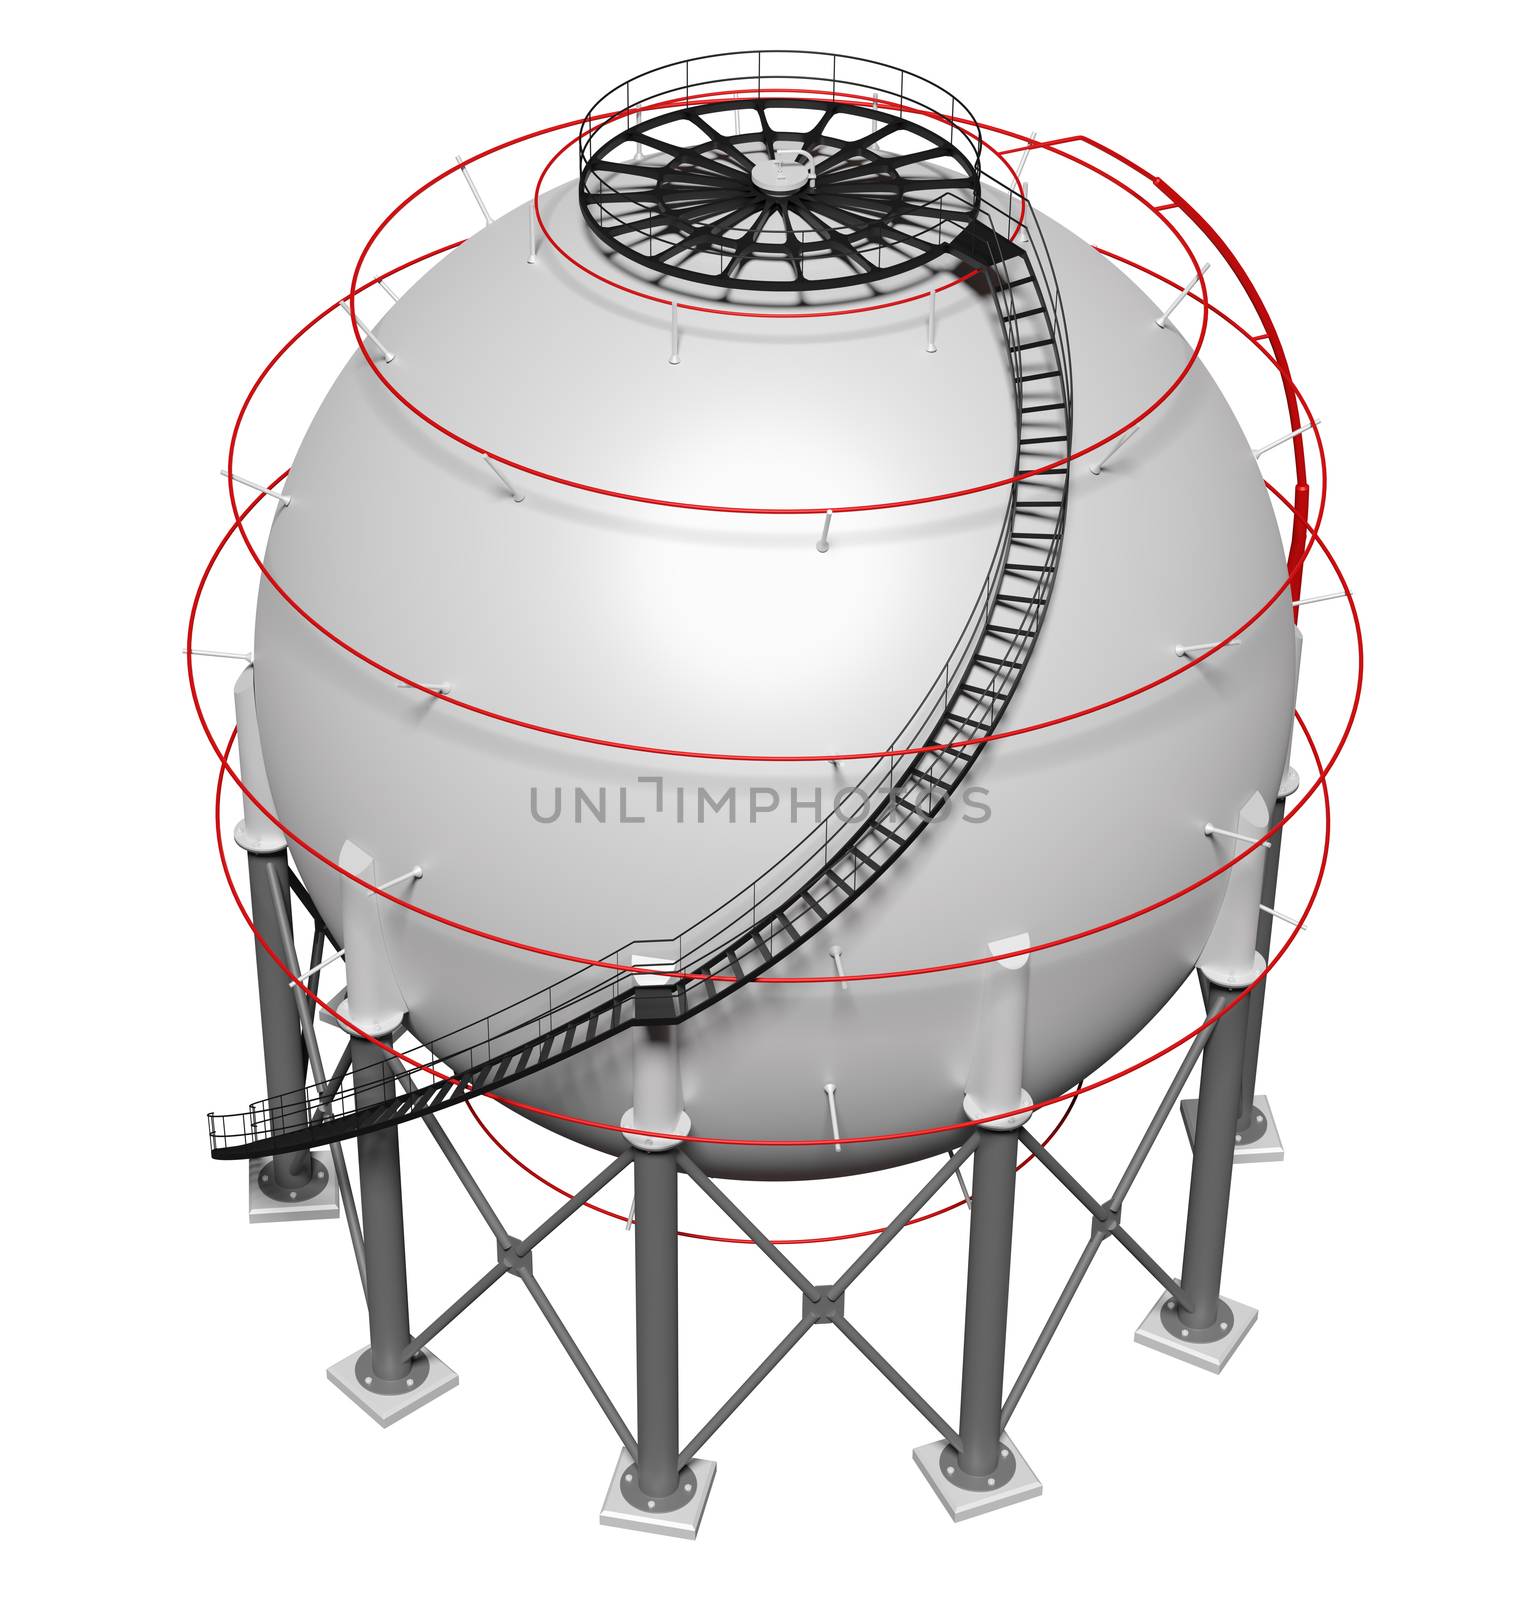 Spherical gas tank. 3D illustration on white background